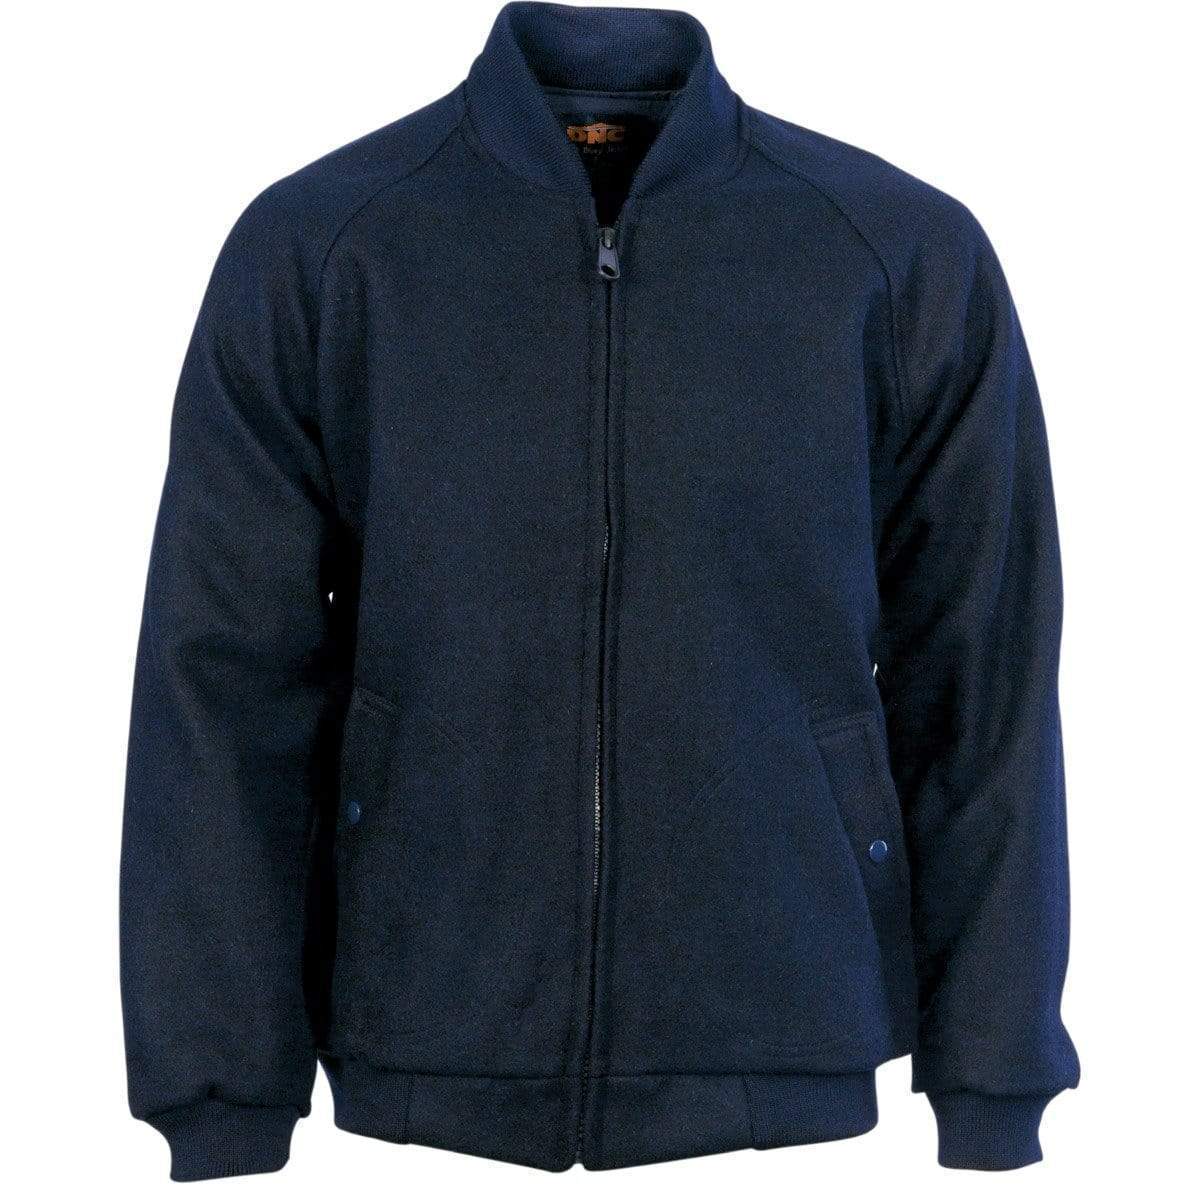 DNC Workwear Corporate Wear DNC WORKWEAR Bluey Jacket with Ribbing Collar & Cuffs 3602